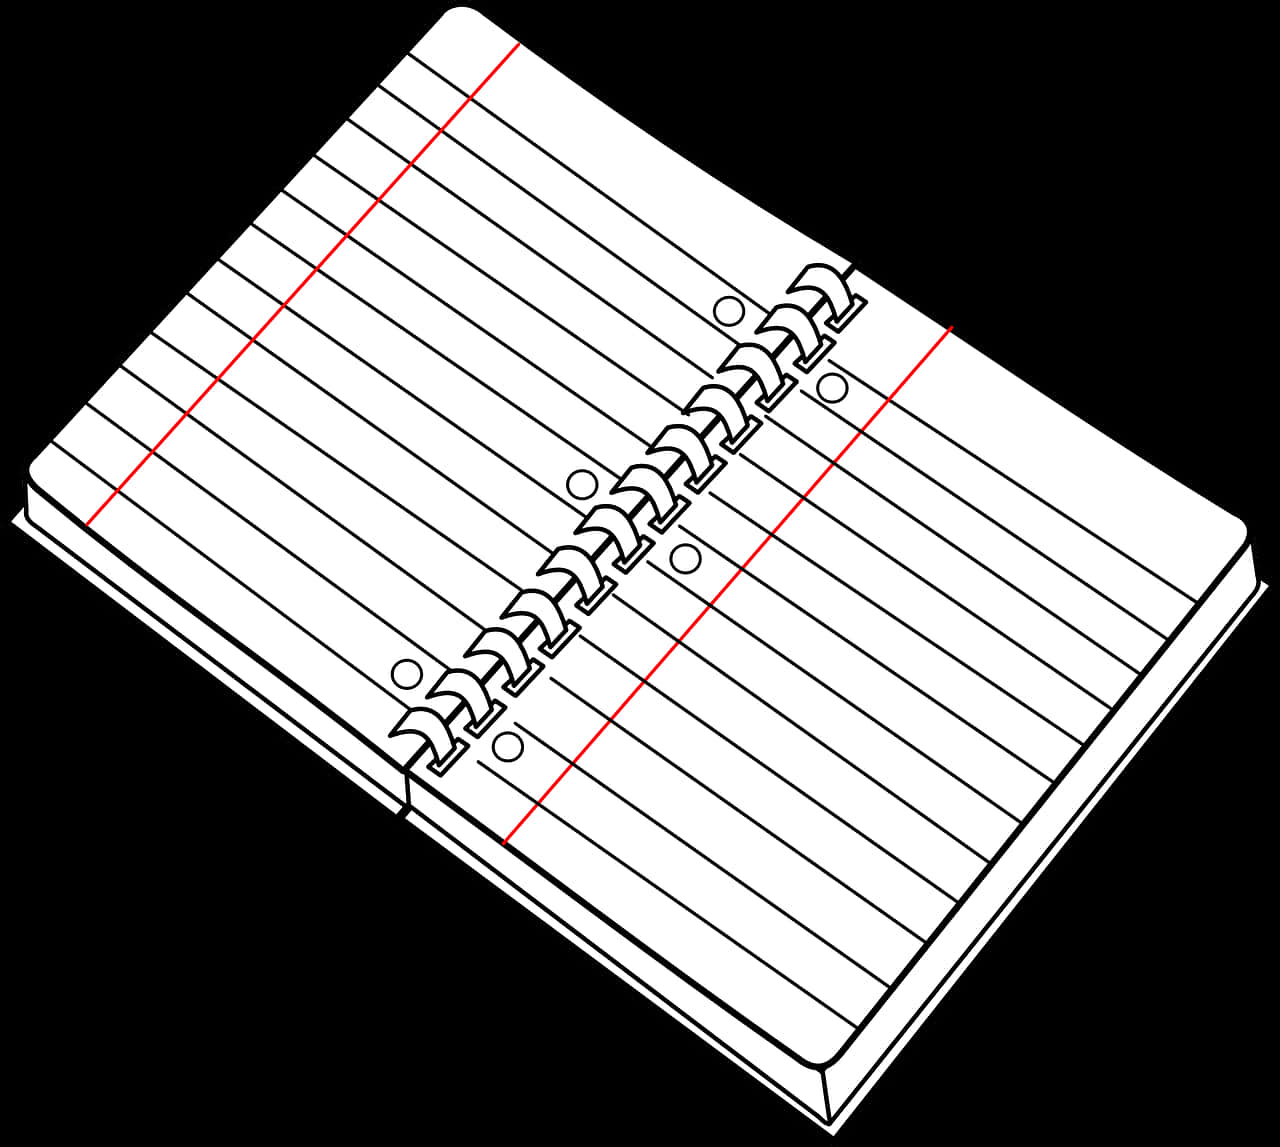 A Sketch Of A Notebook